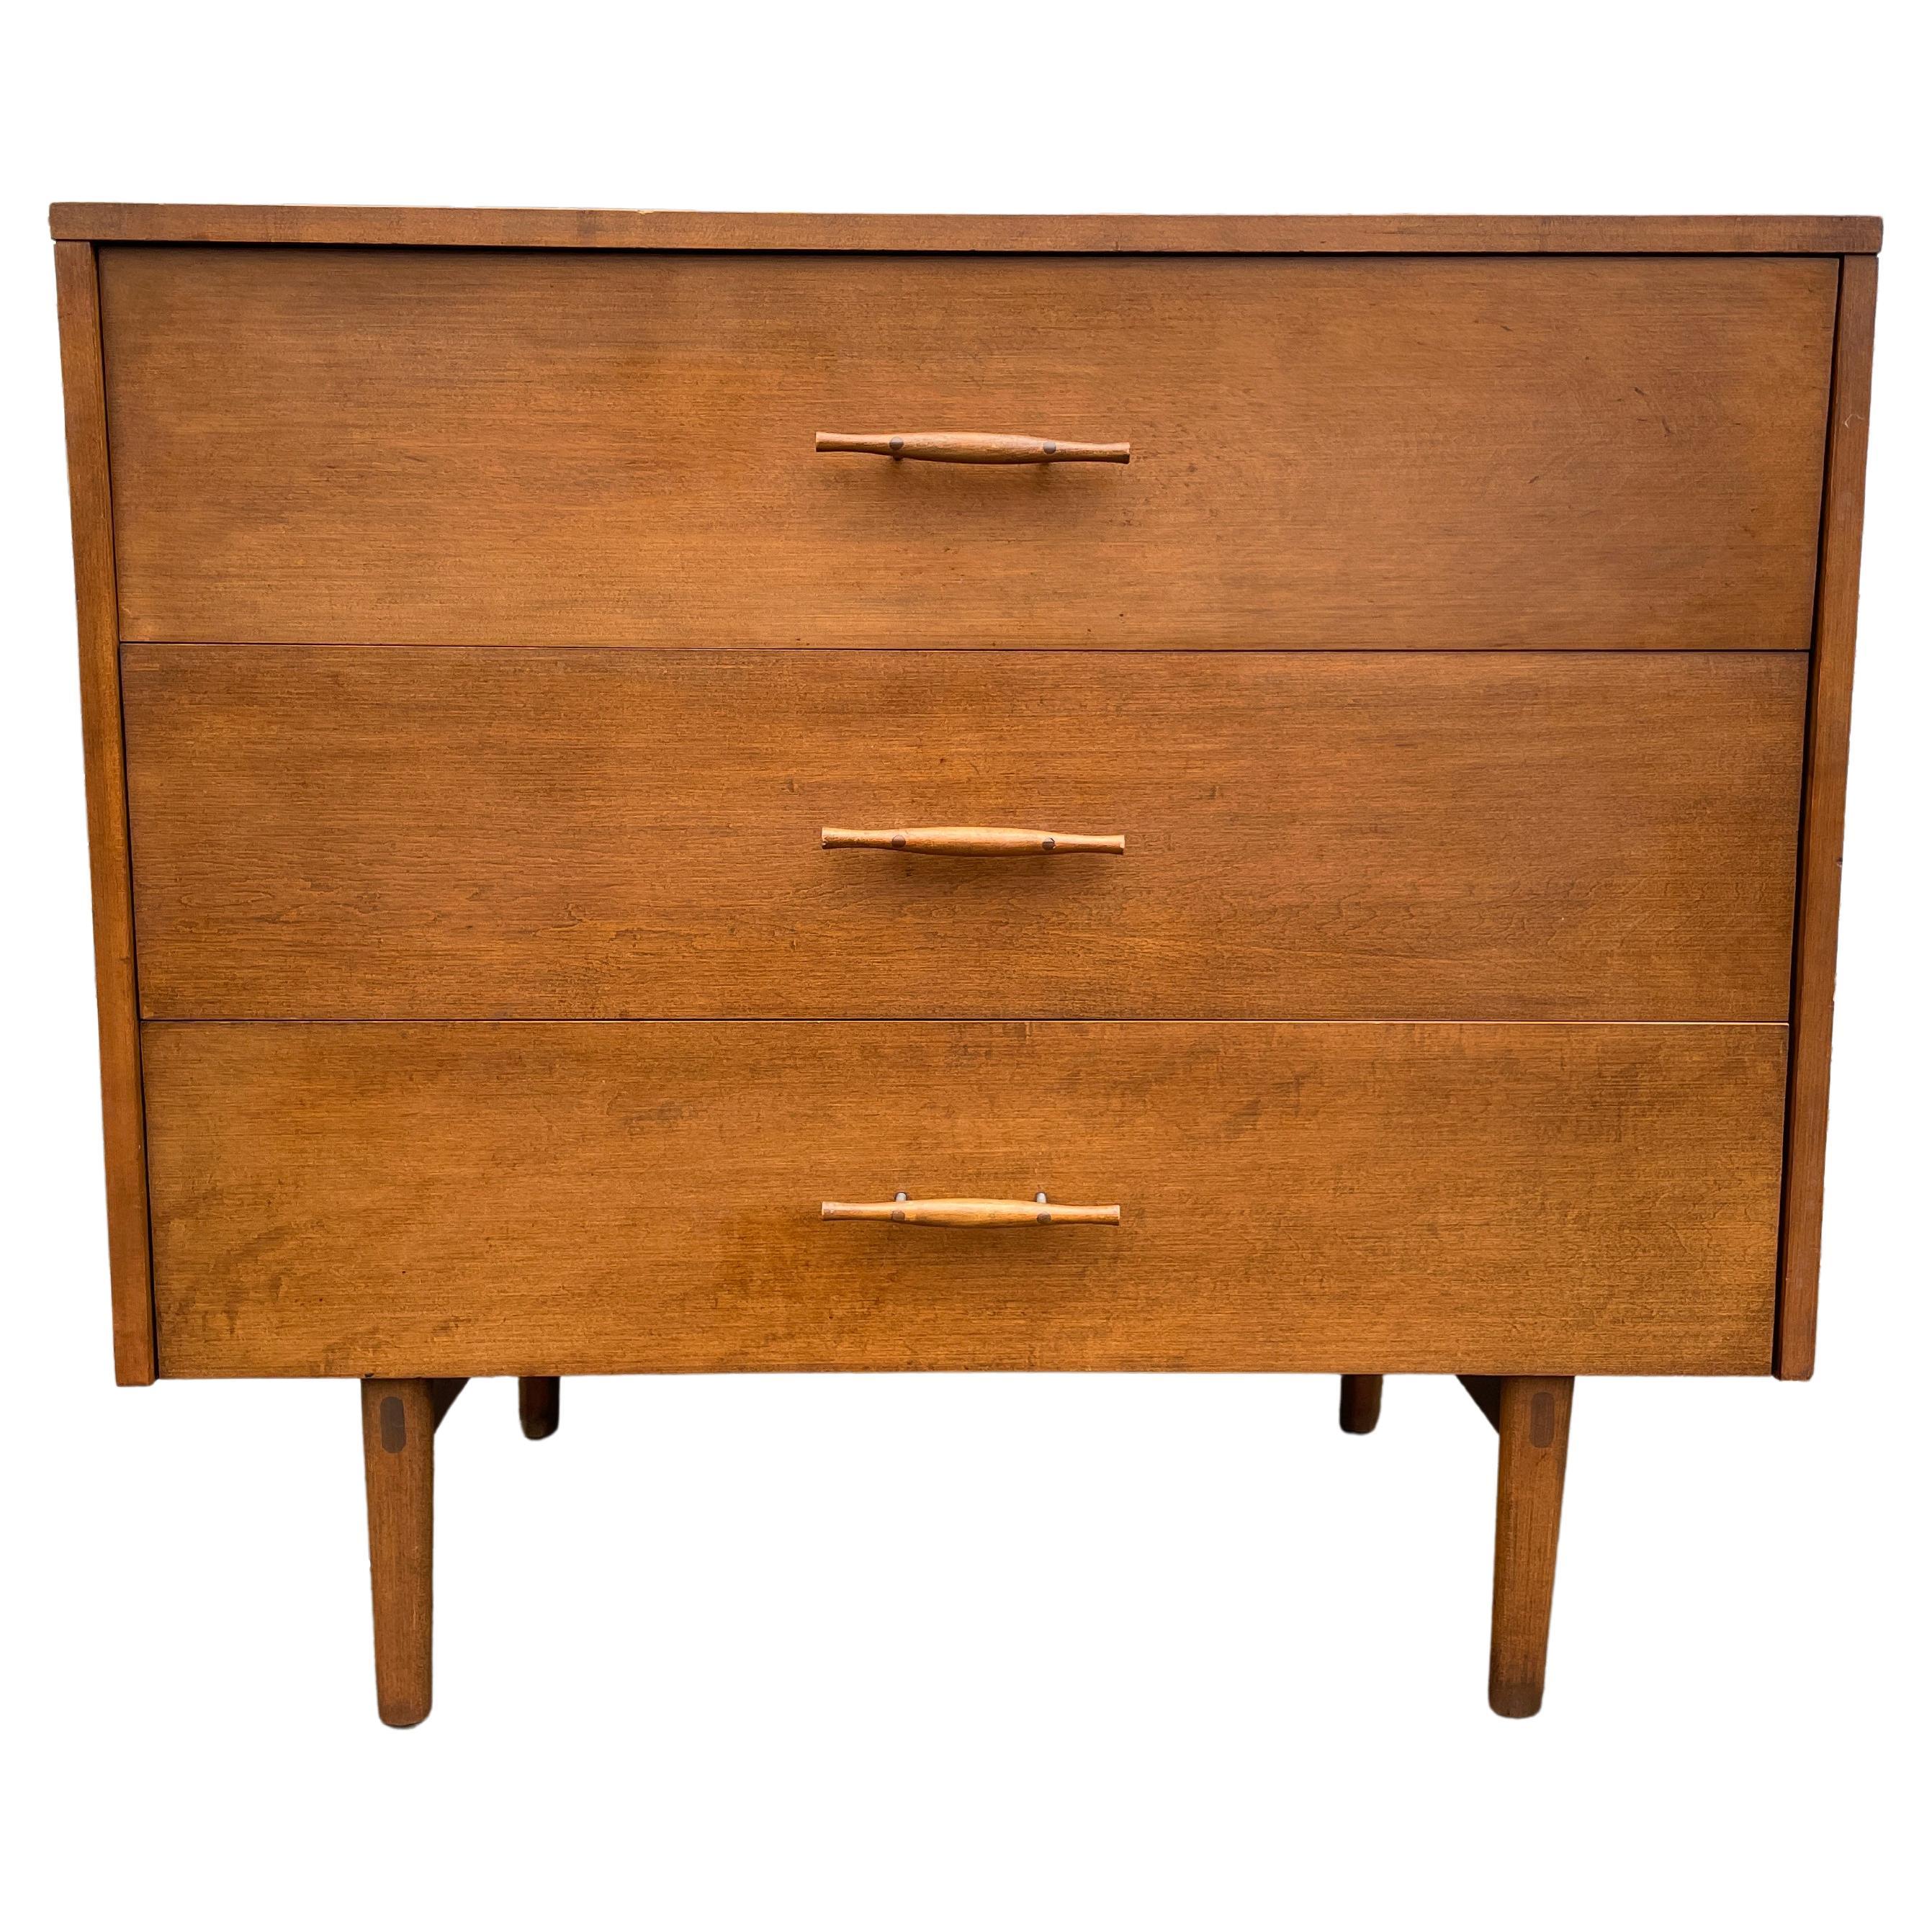 Midcentury Modern Paul McCobb 3-Drawer Dresser #1508 Walnut Finish Pull Handles